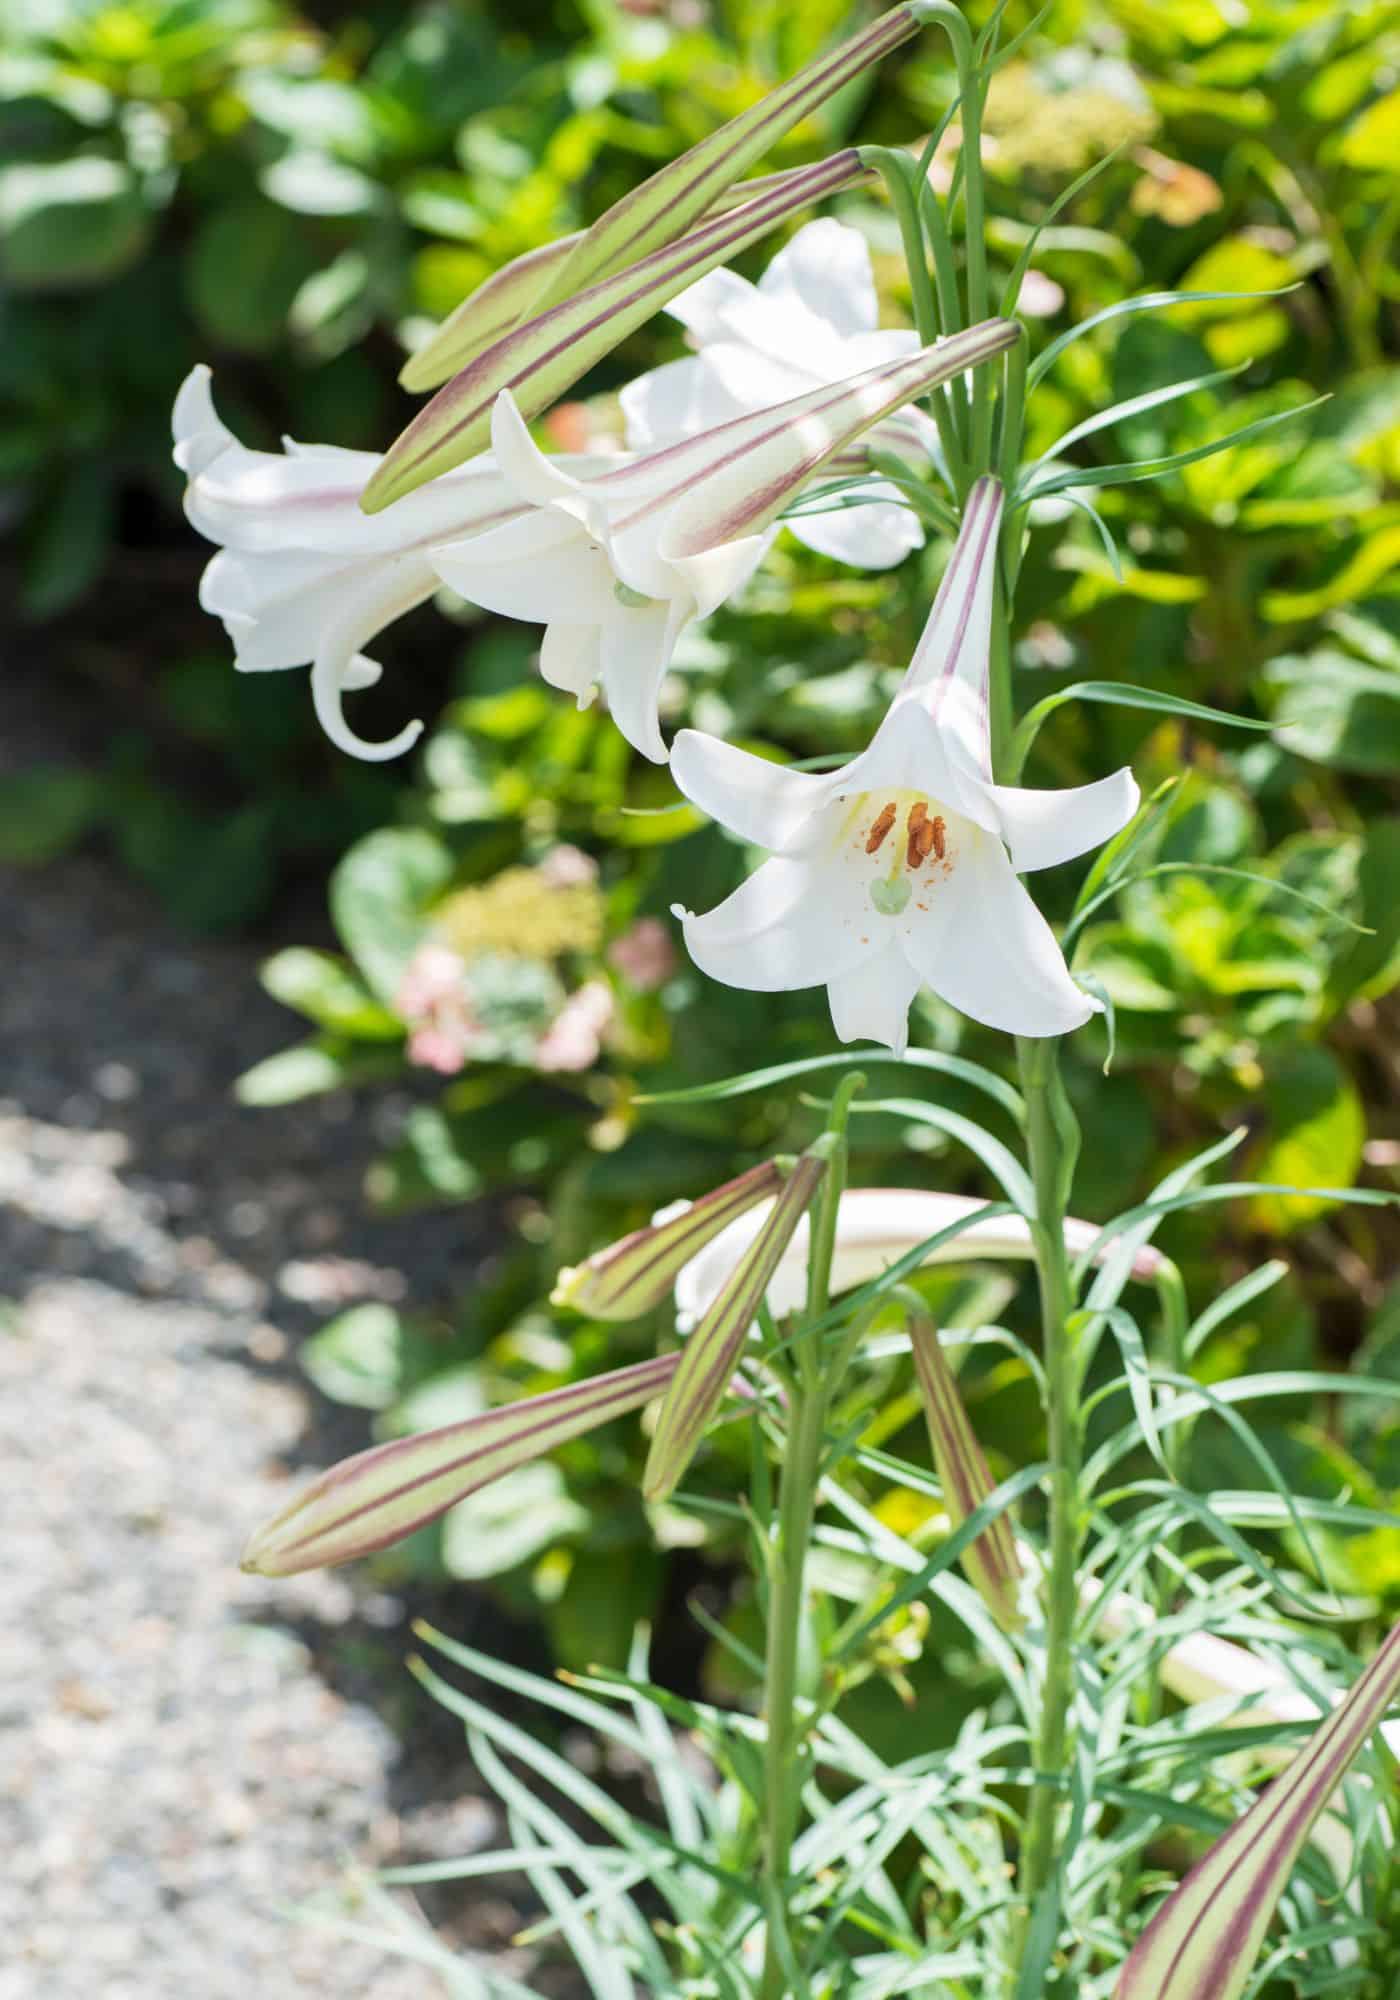 Easter lily (lilium longiflorum) in garden